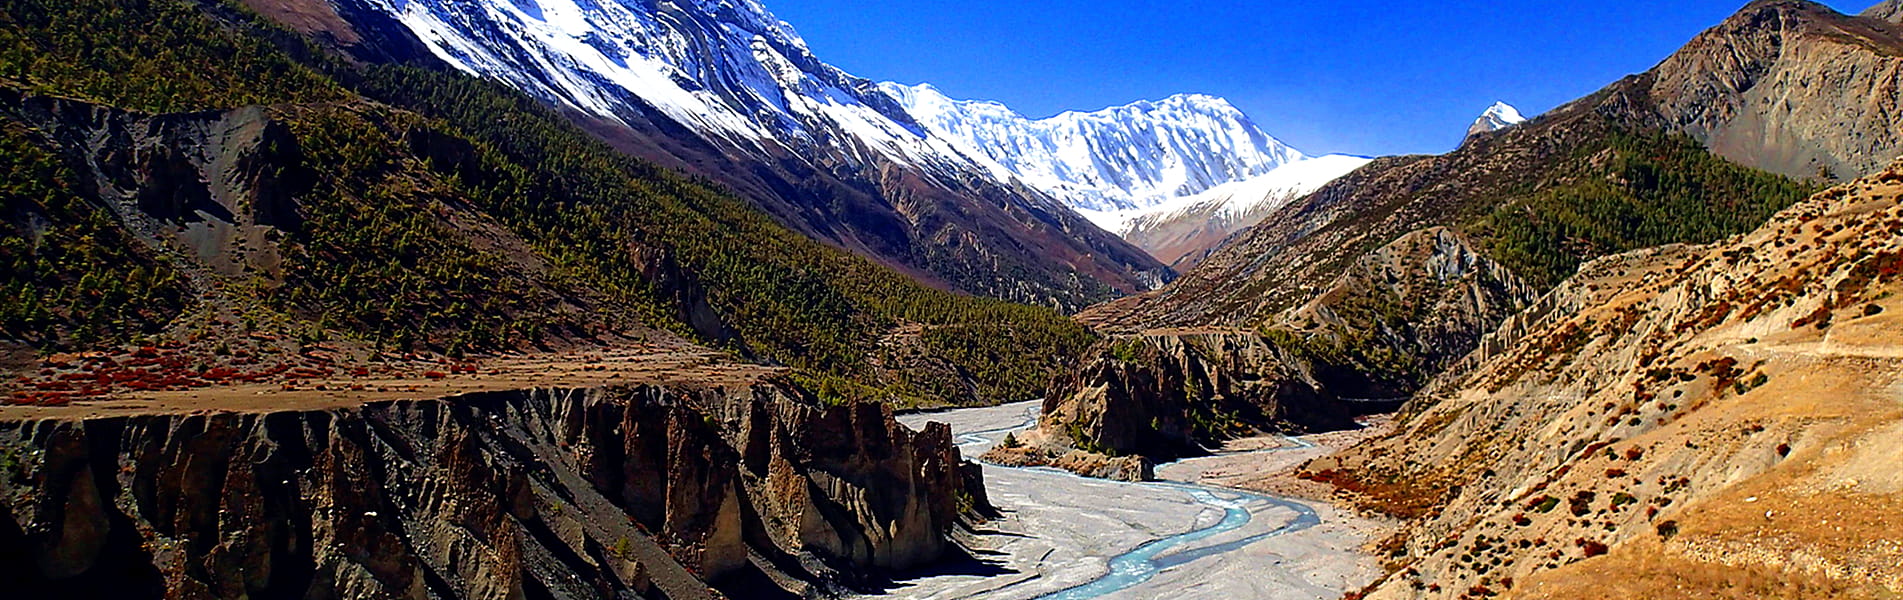 Annapurna Valley, Nepal